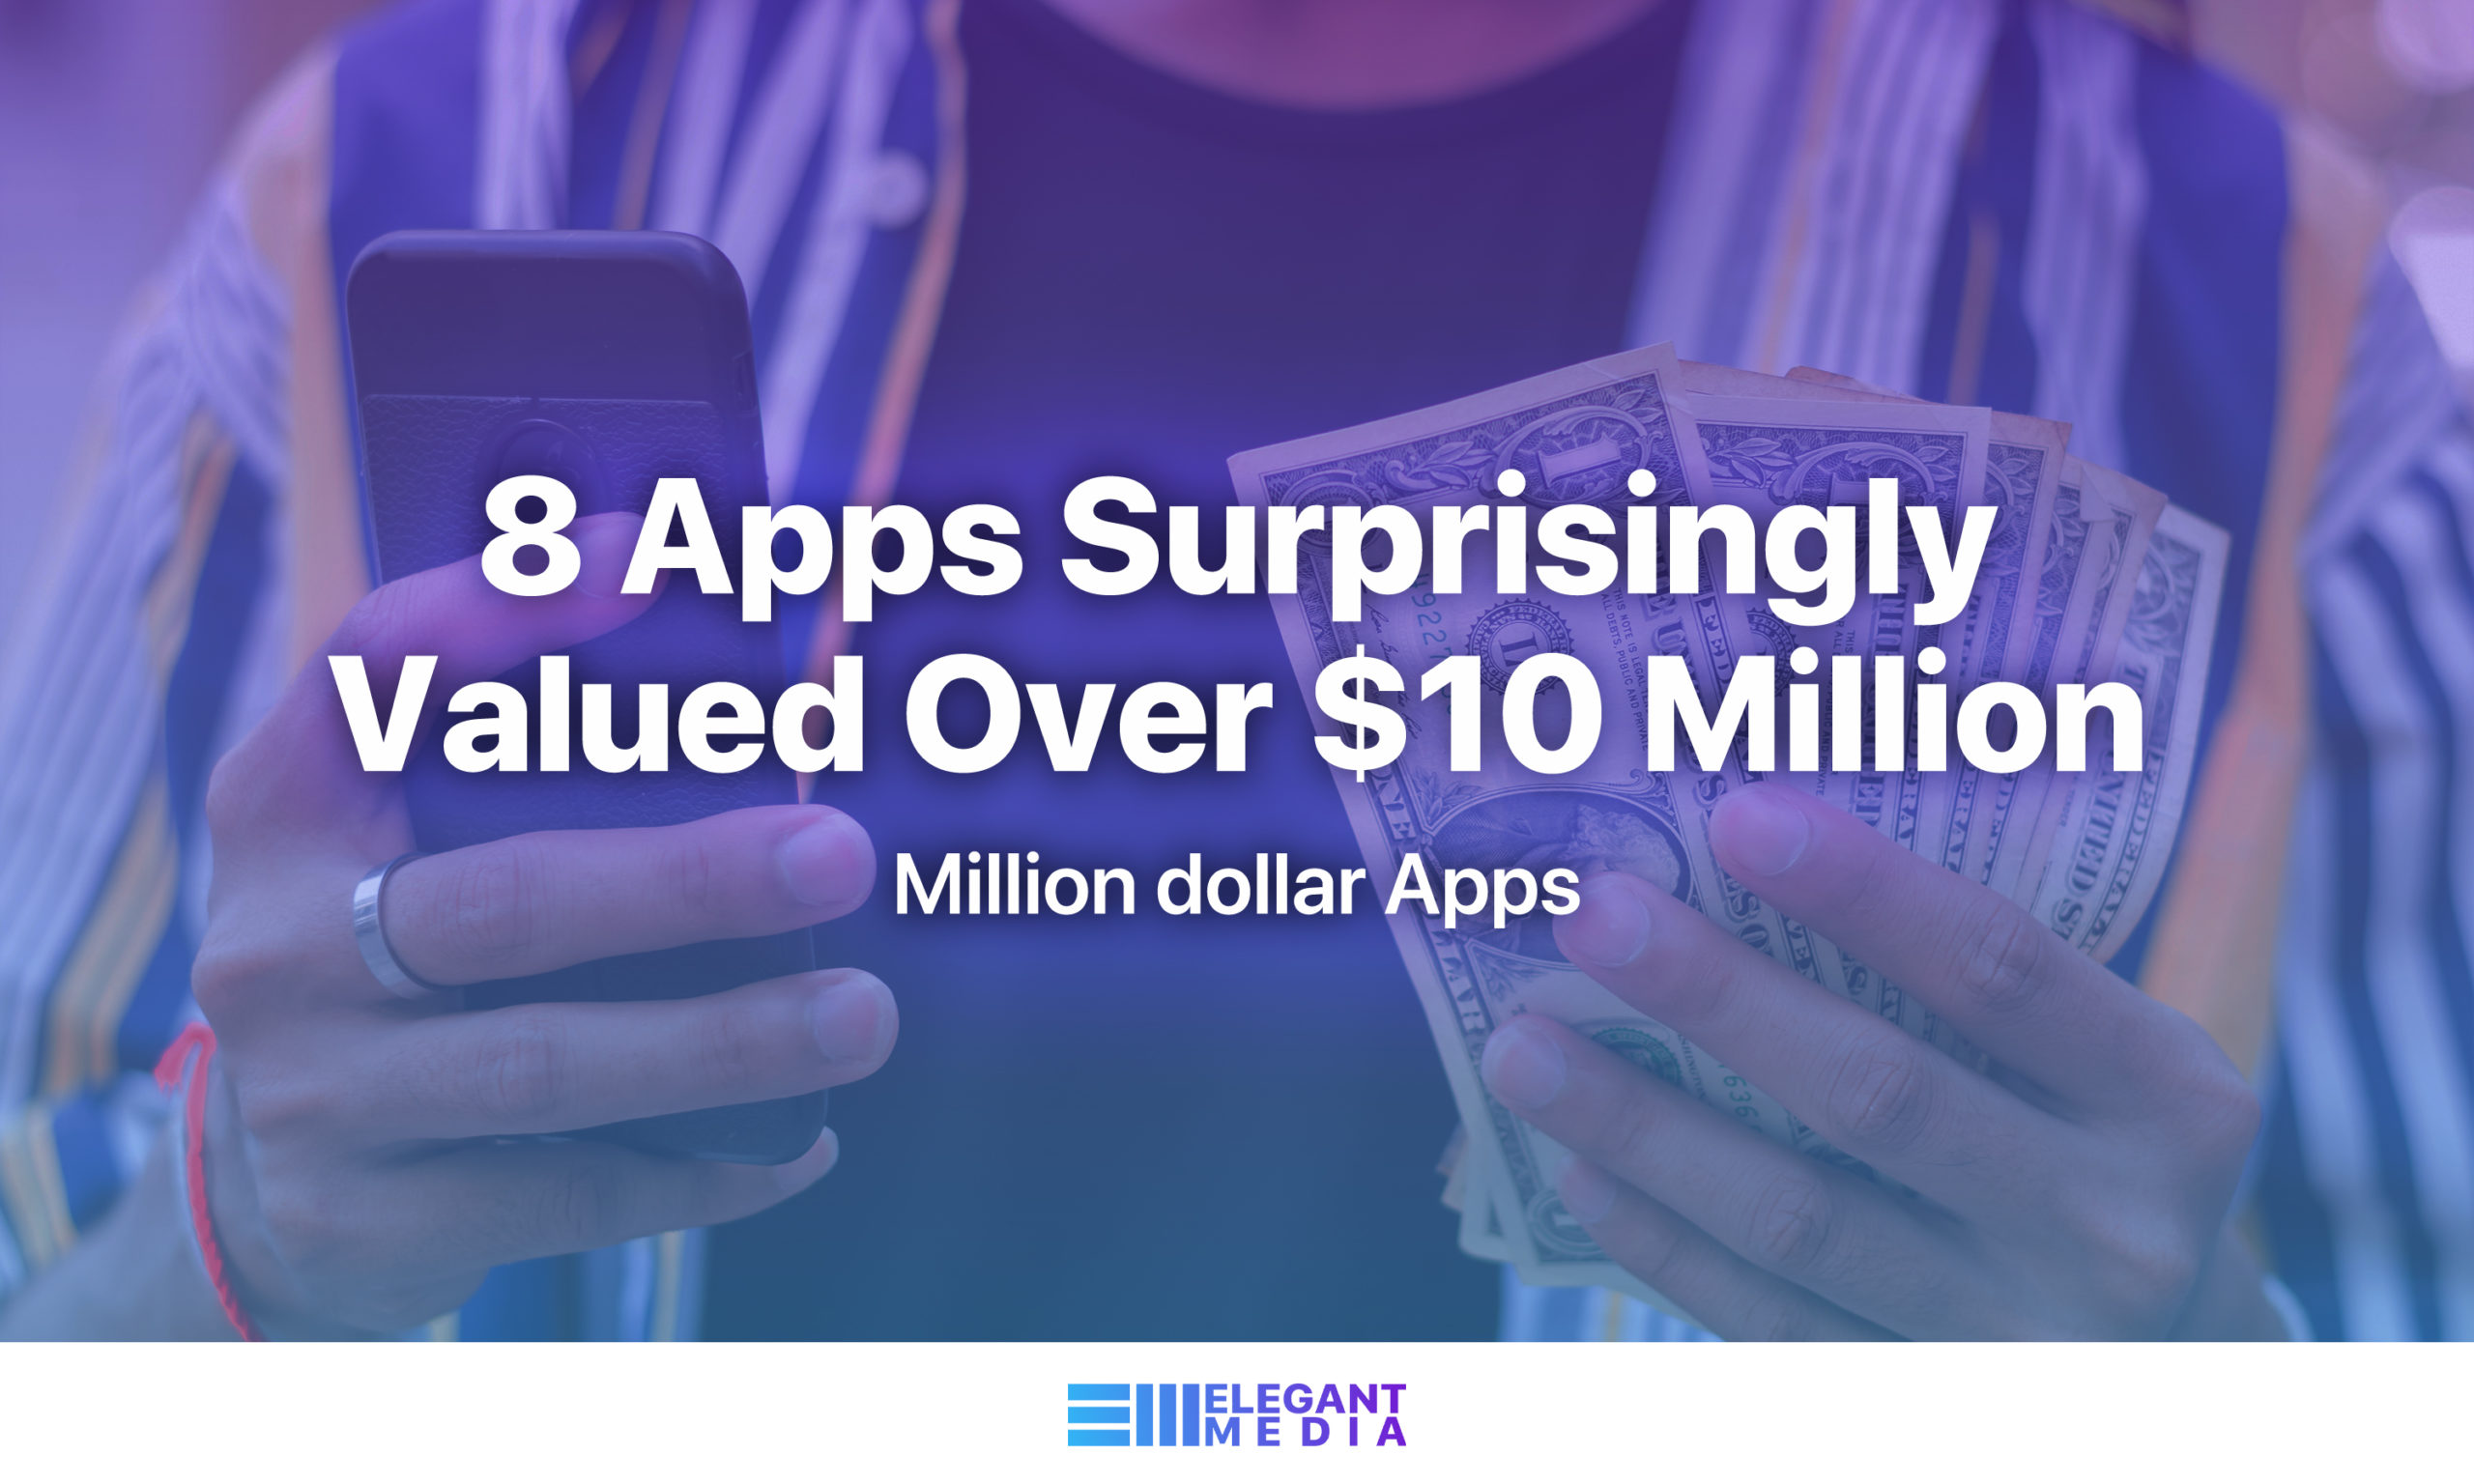 8 Apps Surprisingly Valued Over $10 Million (Million dollar Apps)